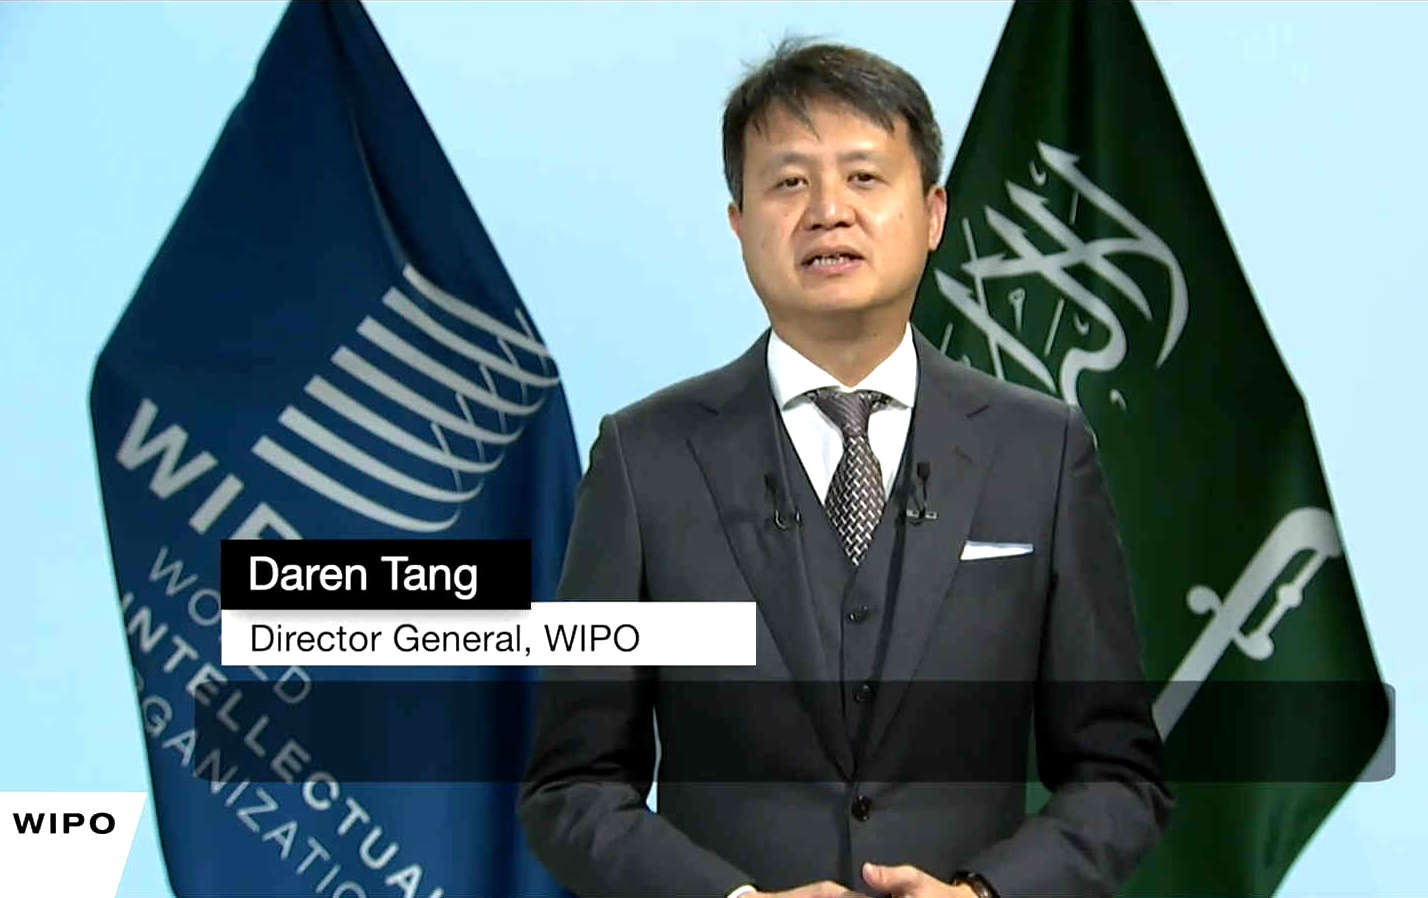 Daren Tang, Director General, World Intellectual Property Organization